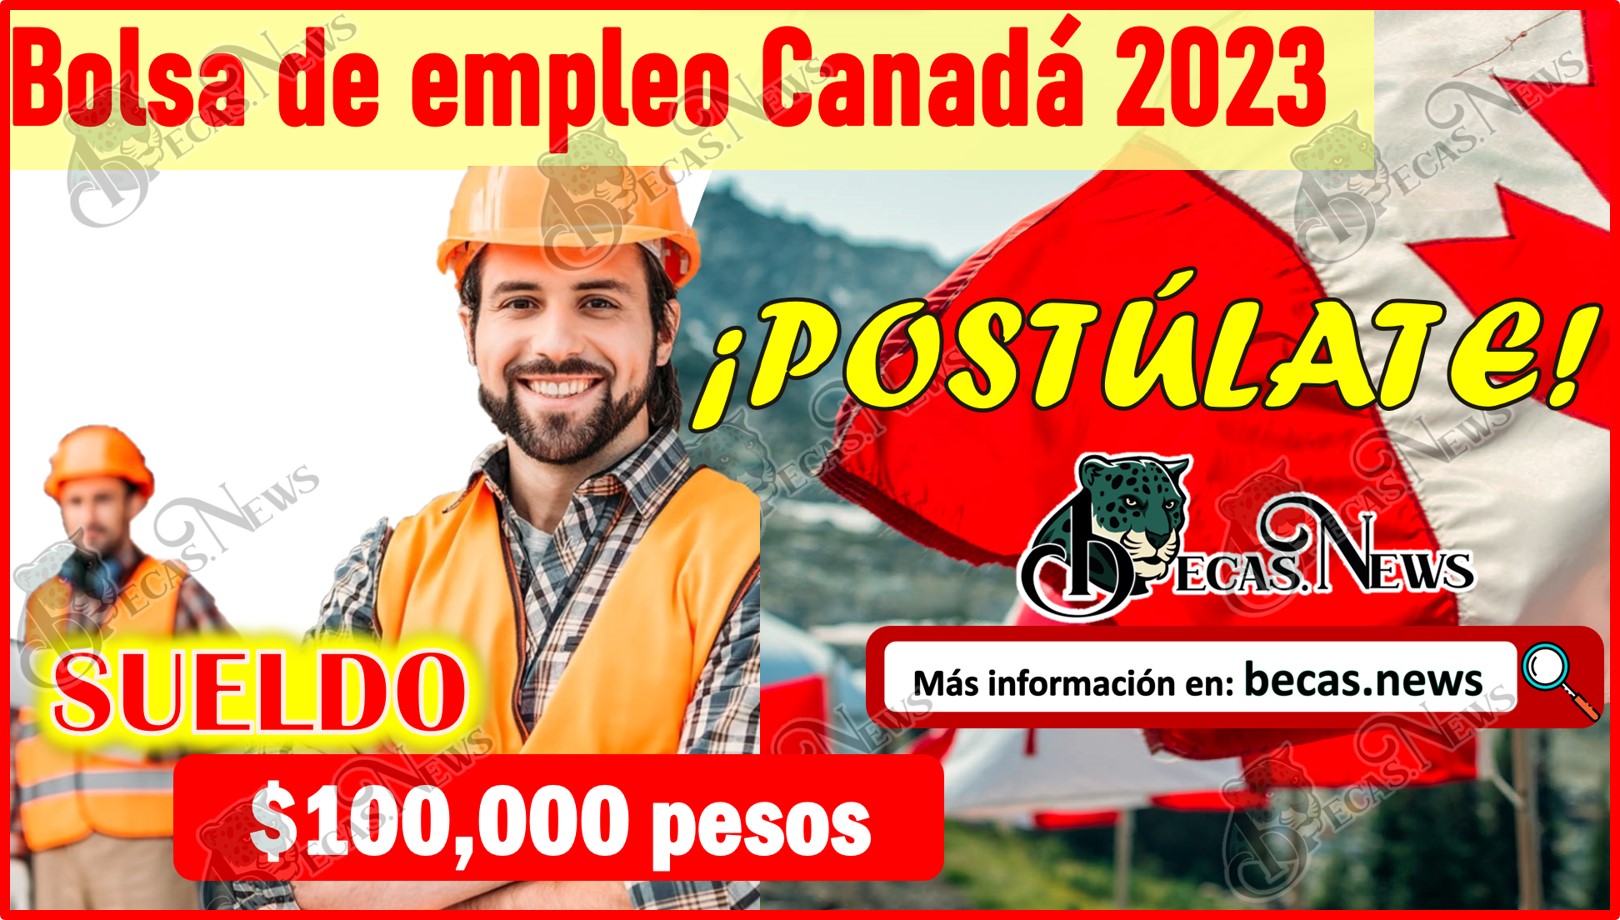 Oferta de empleo Canadá ¡Postúlate y gana $100 mil pesos!